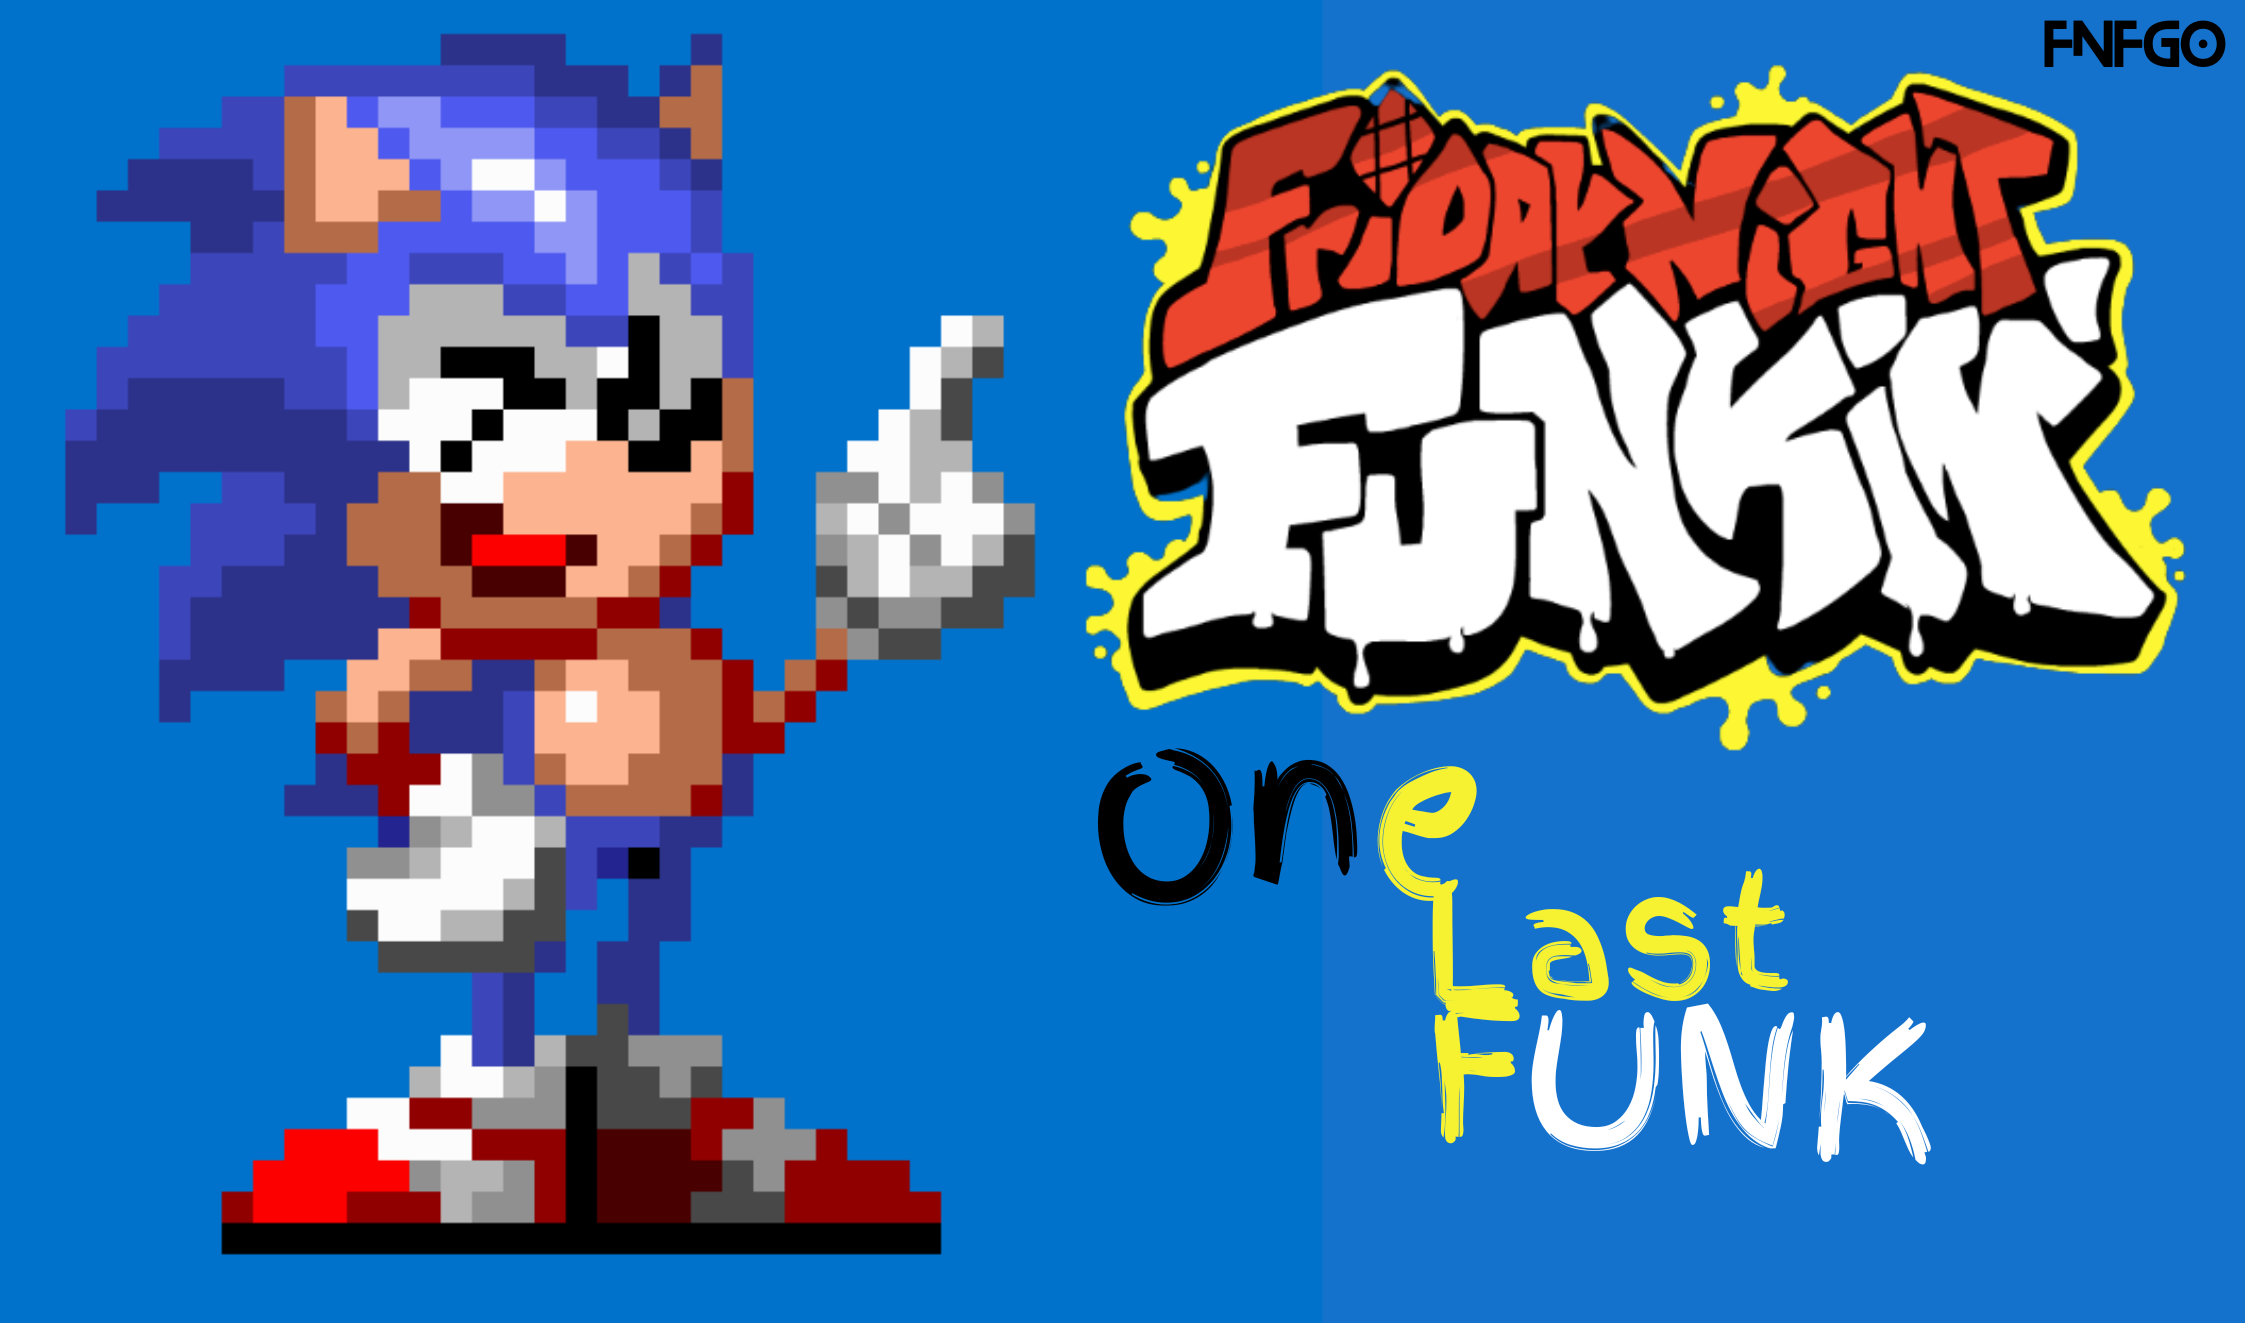 Stream FNF Vs Sonic.EXE - Powerless (Fan-Made Fleetway Song) - Song By  Furscorns by Kei/Menxinq